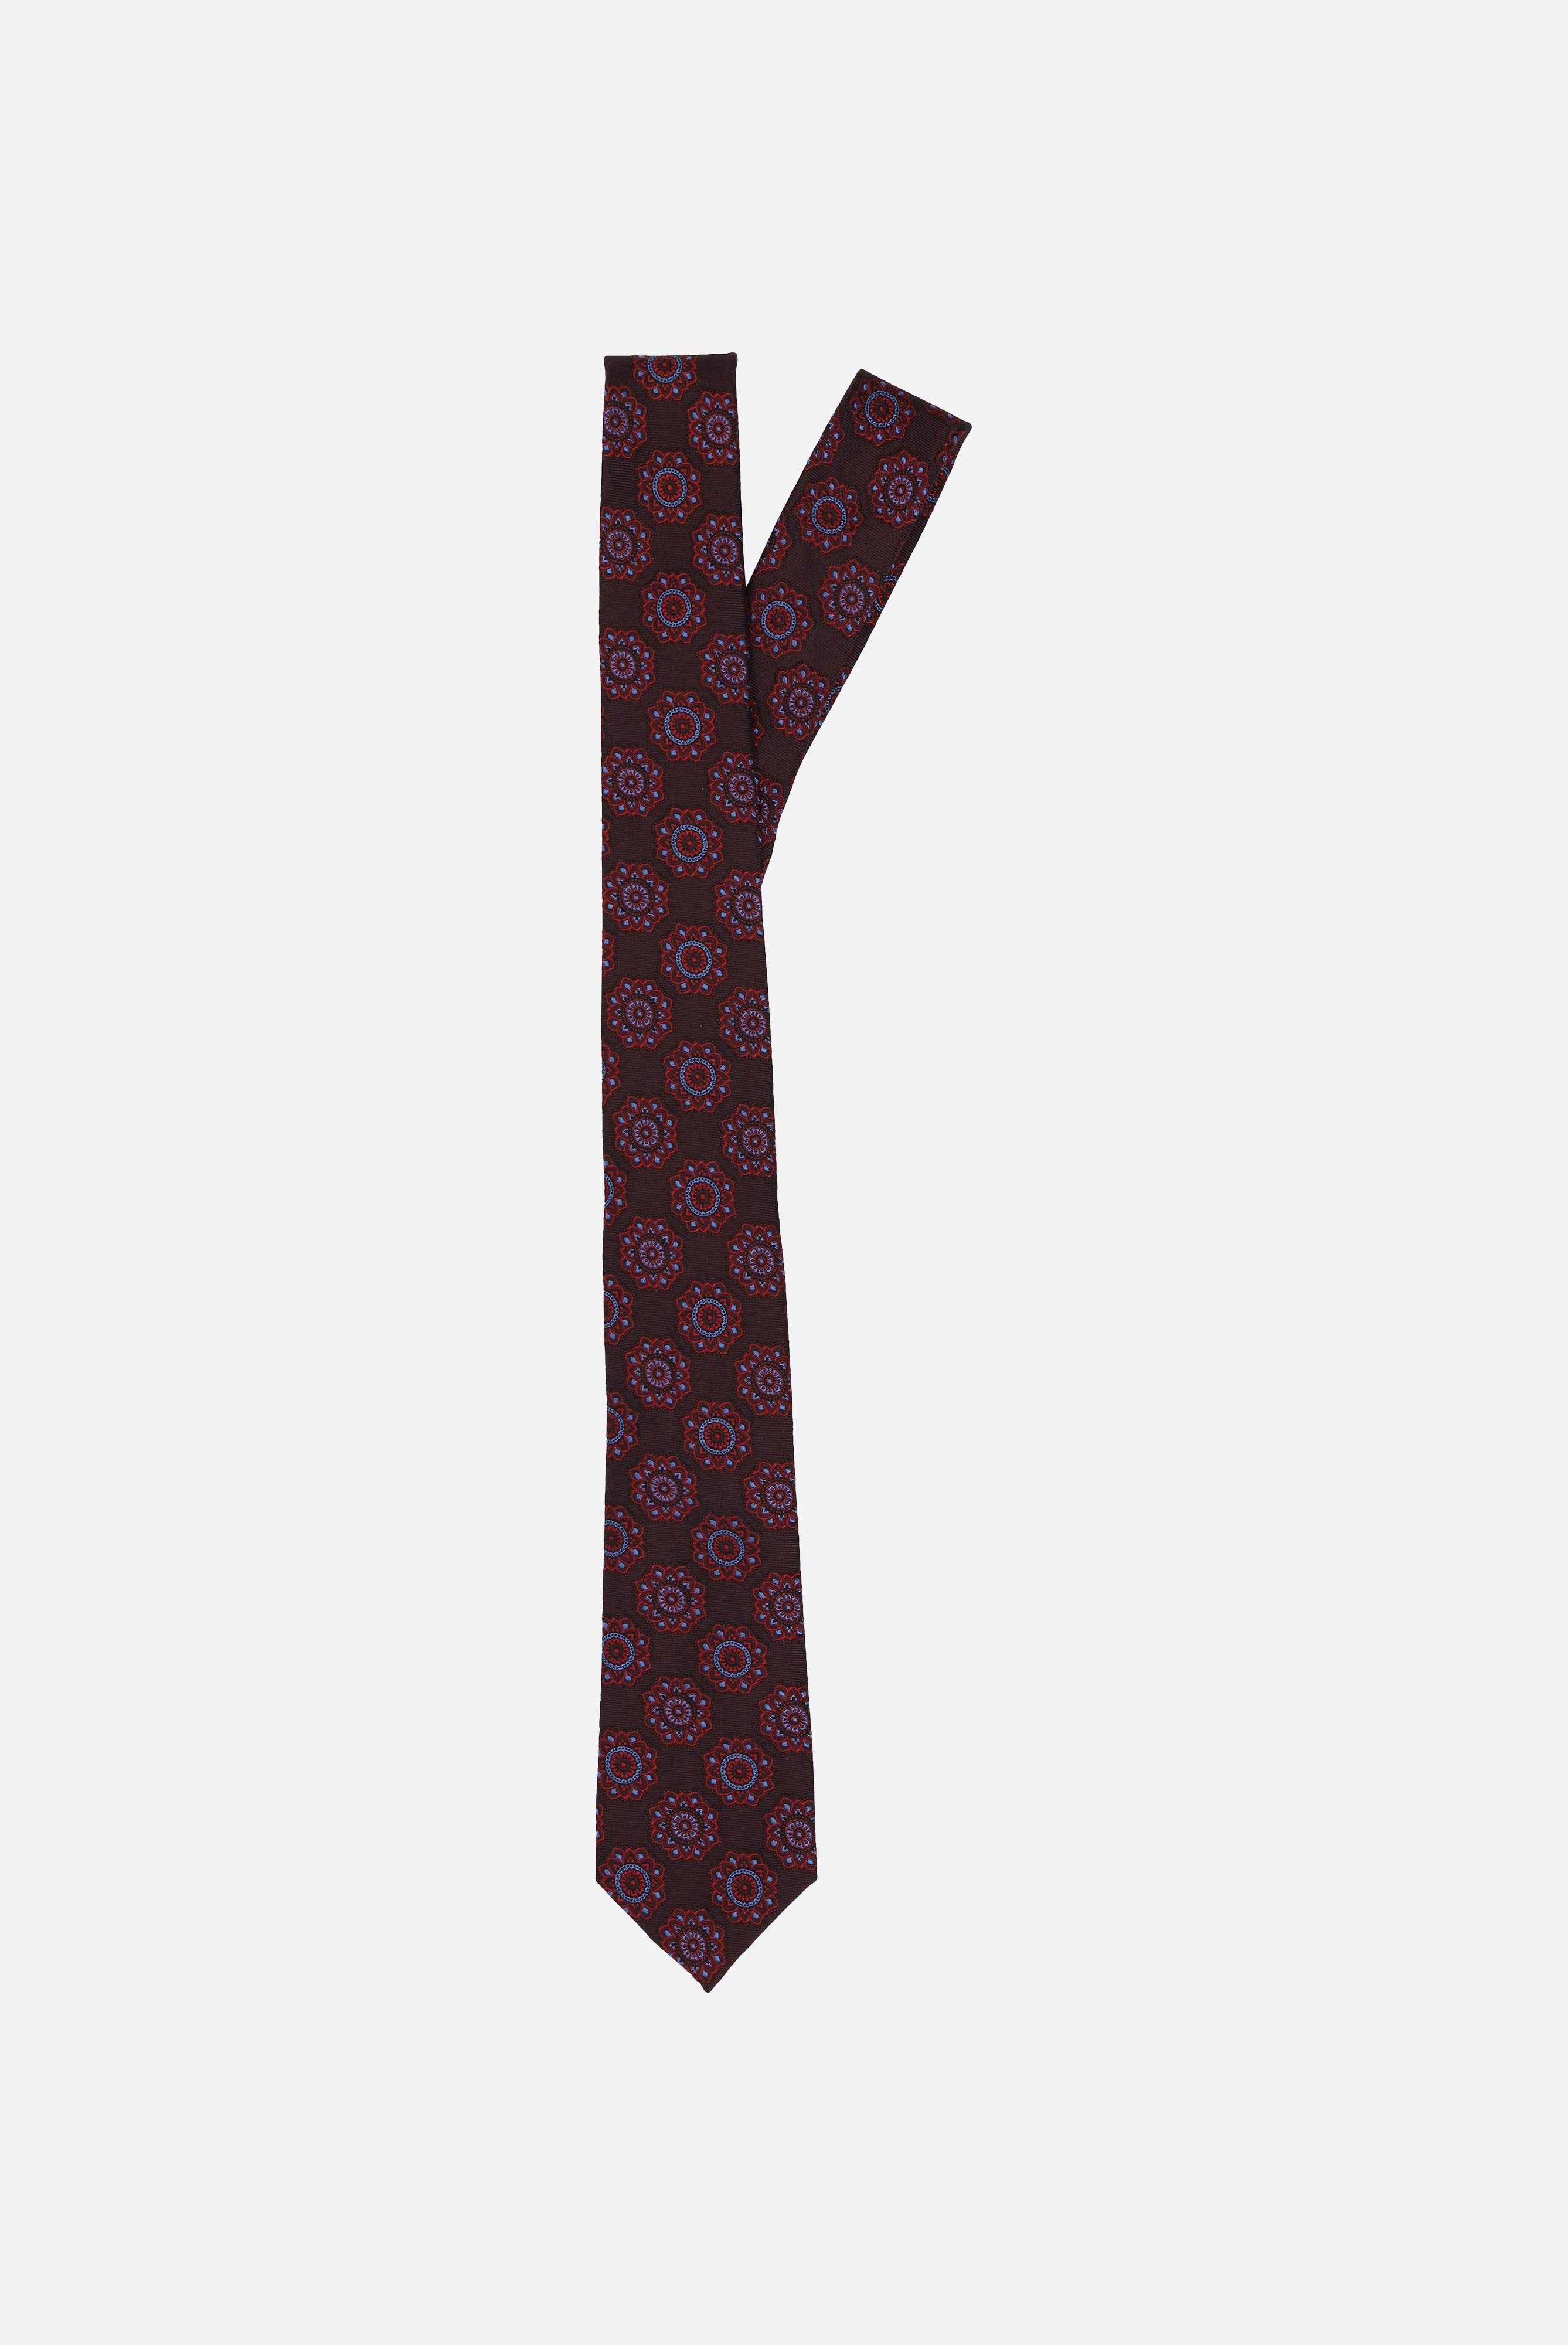 Jacquard-Krawatte mit Medaillon Druck